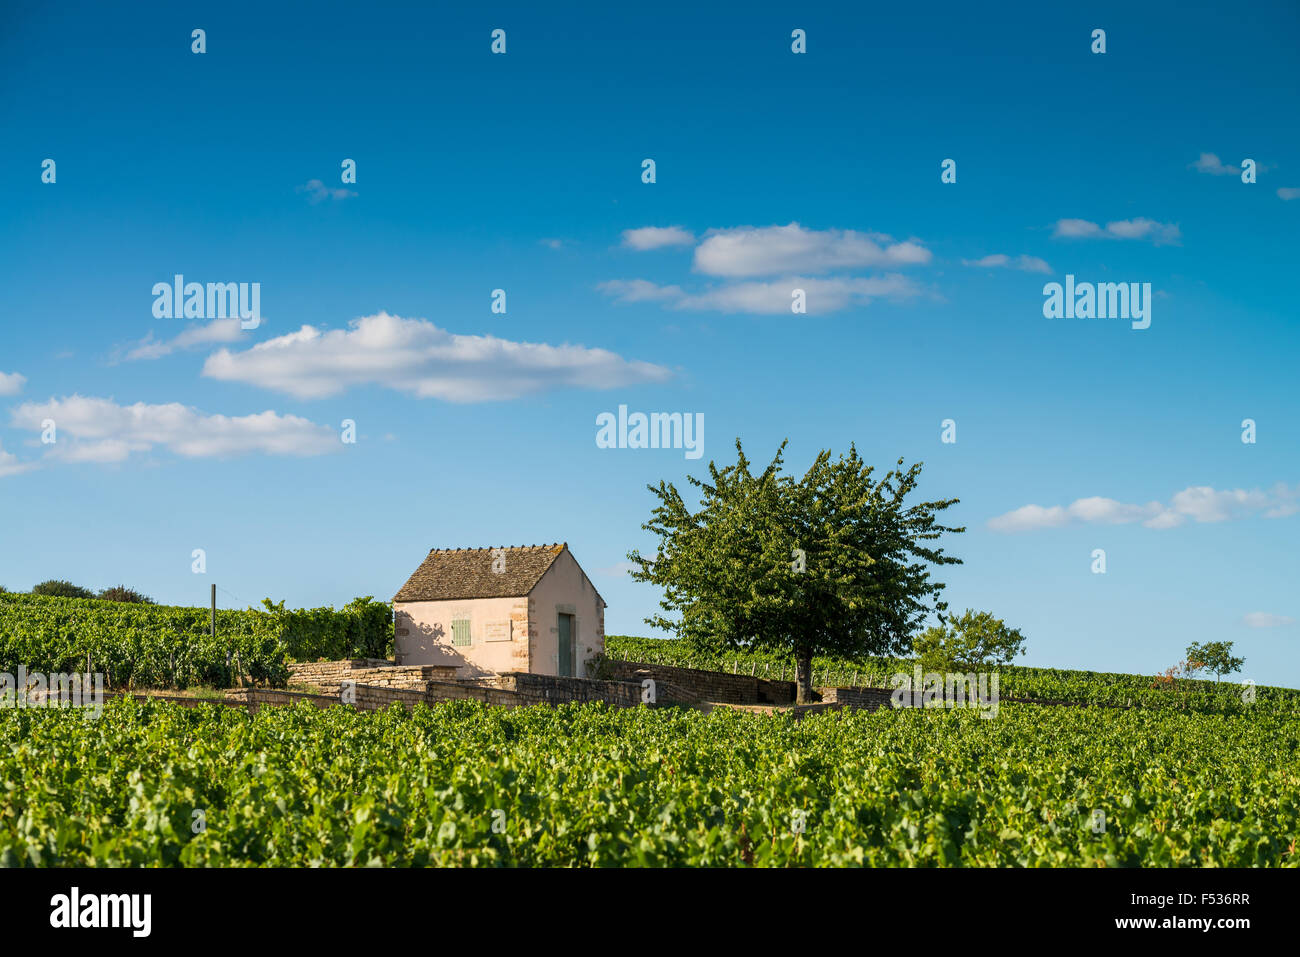 Vineyard, Savigny Les Beaune, Cote d'Or, Burgundy, France, Europe Stock Photo